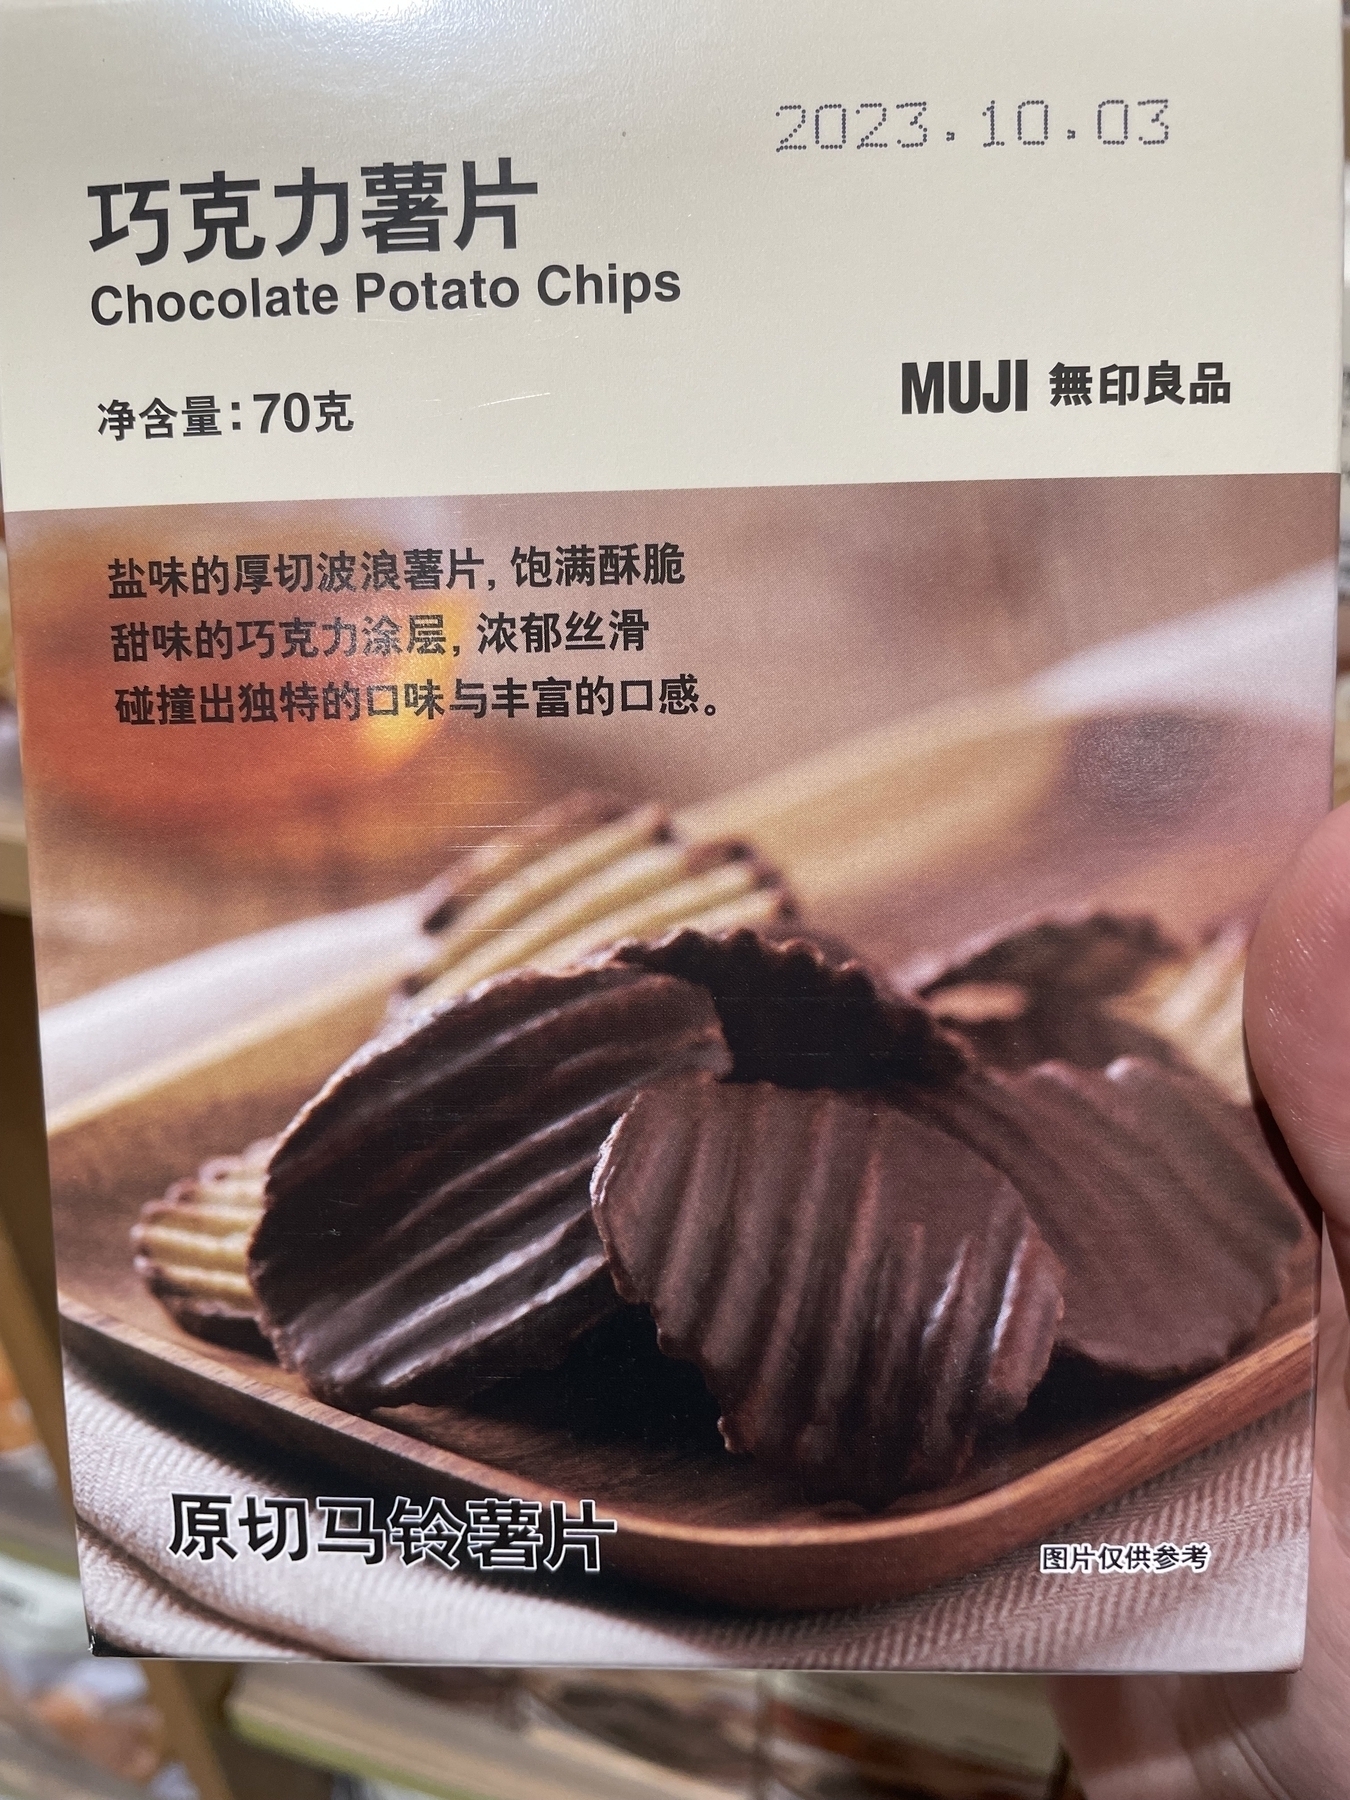 Bag of chocolate covered potato crisps